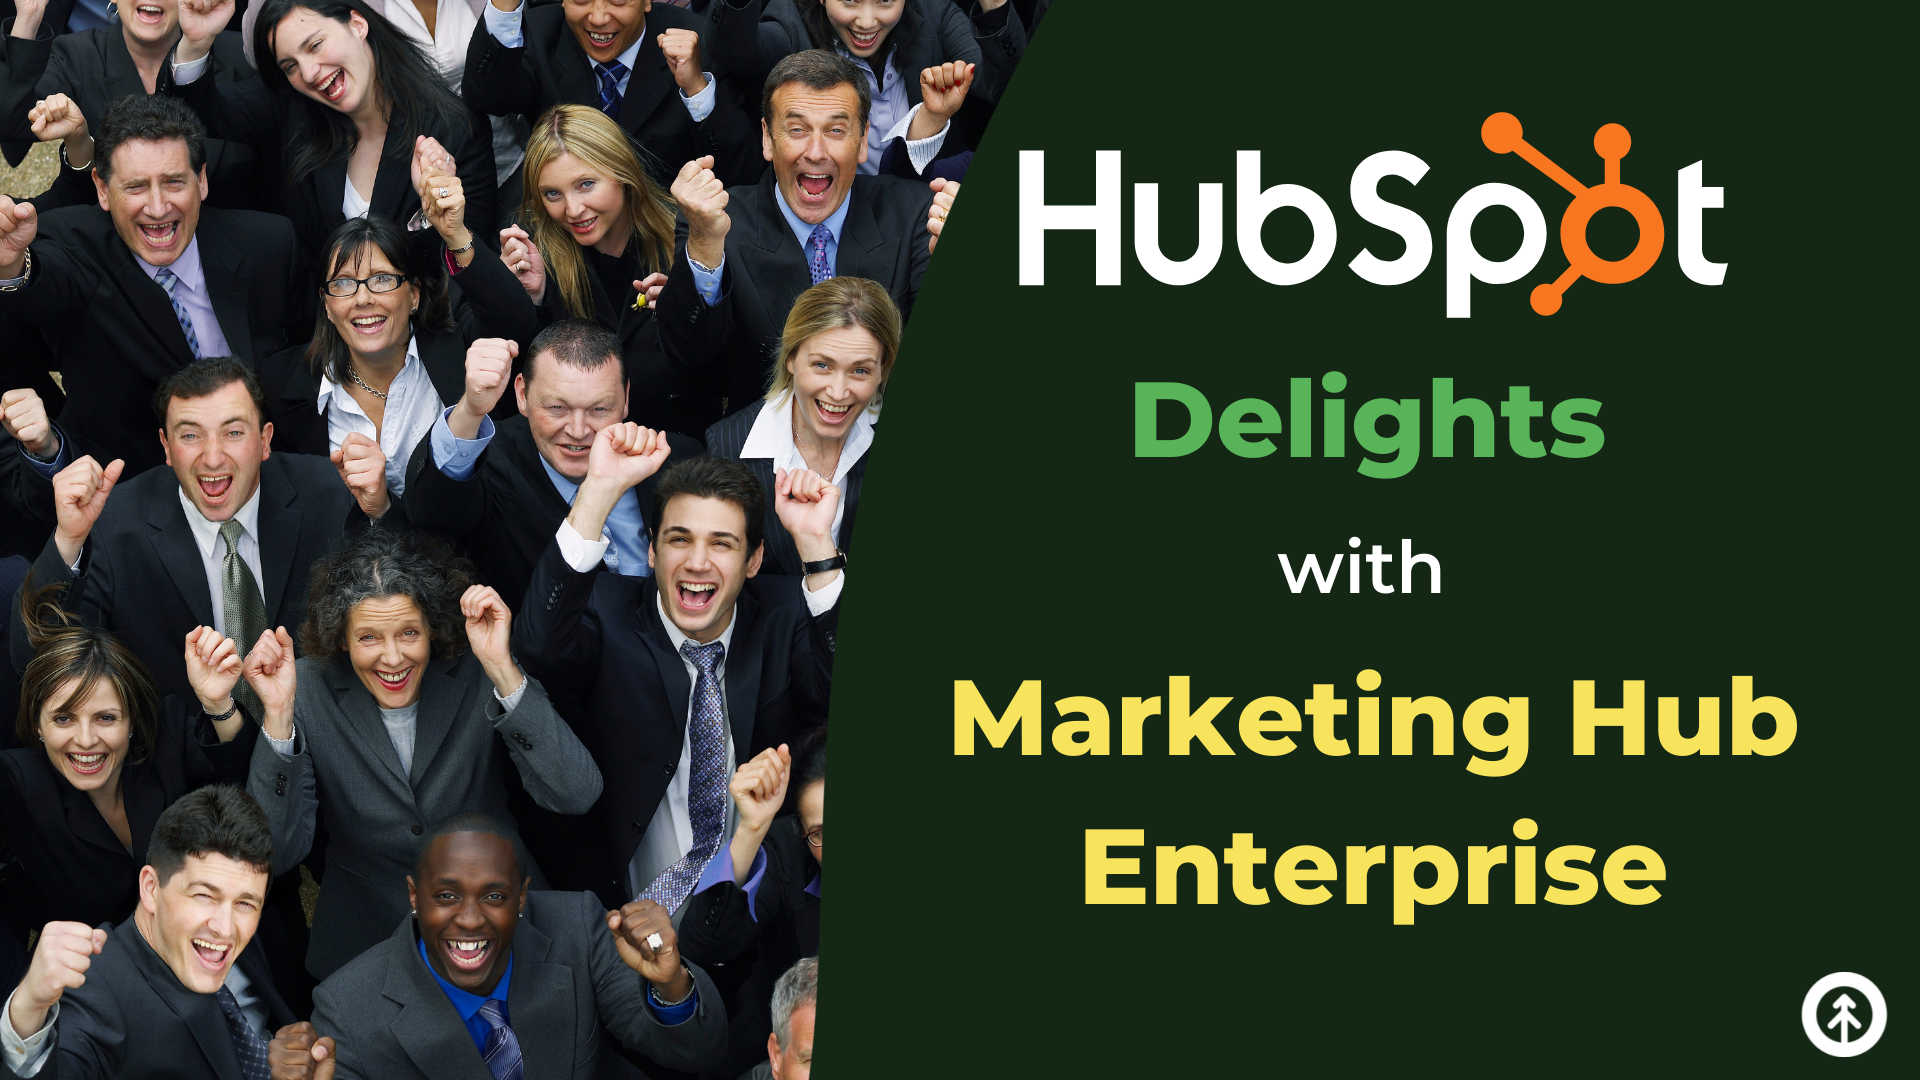 HubSpot Delights with Marketing Hub Enterprise